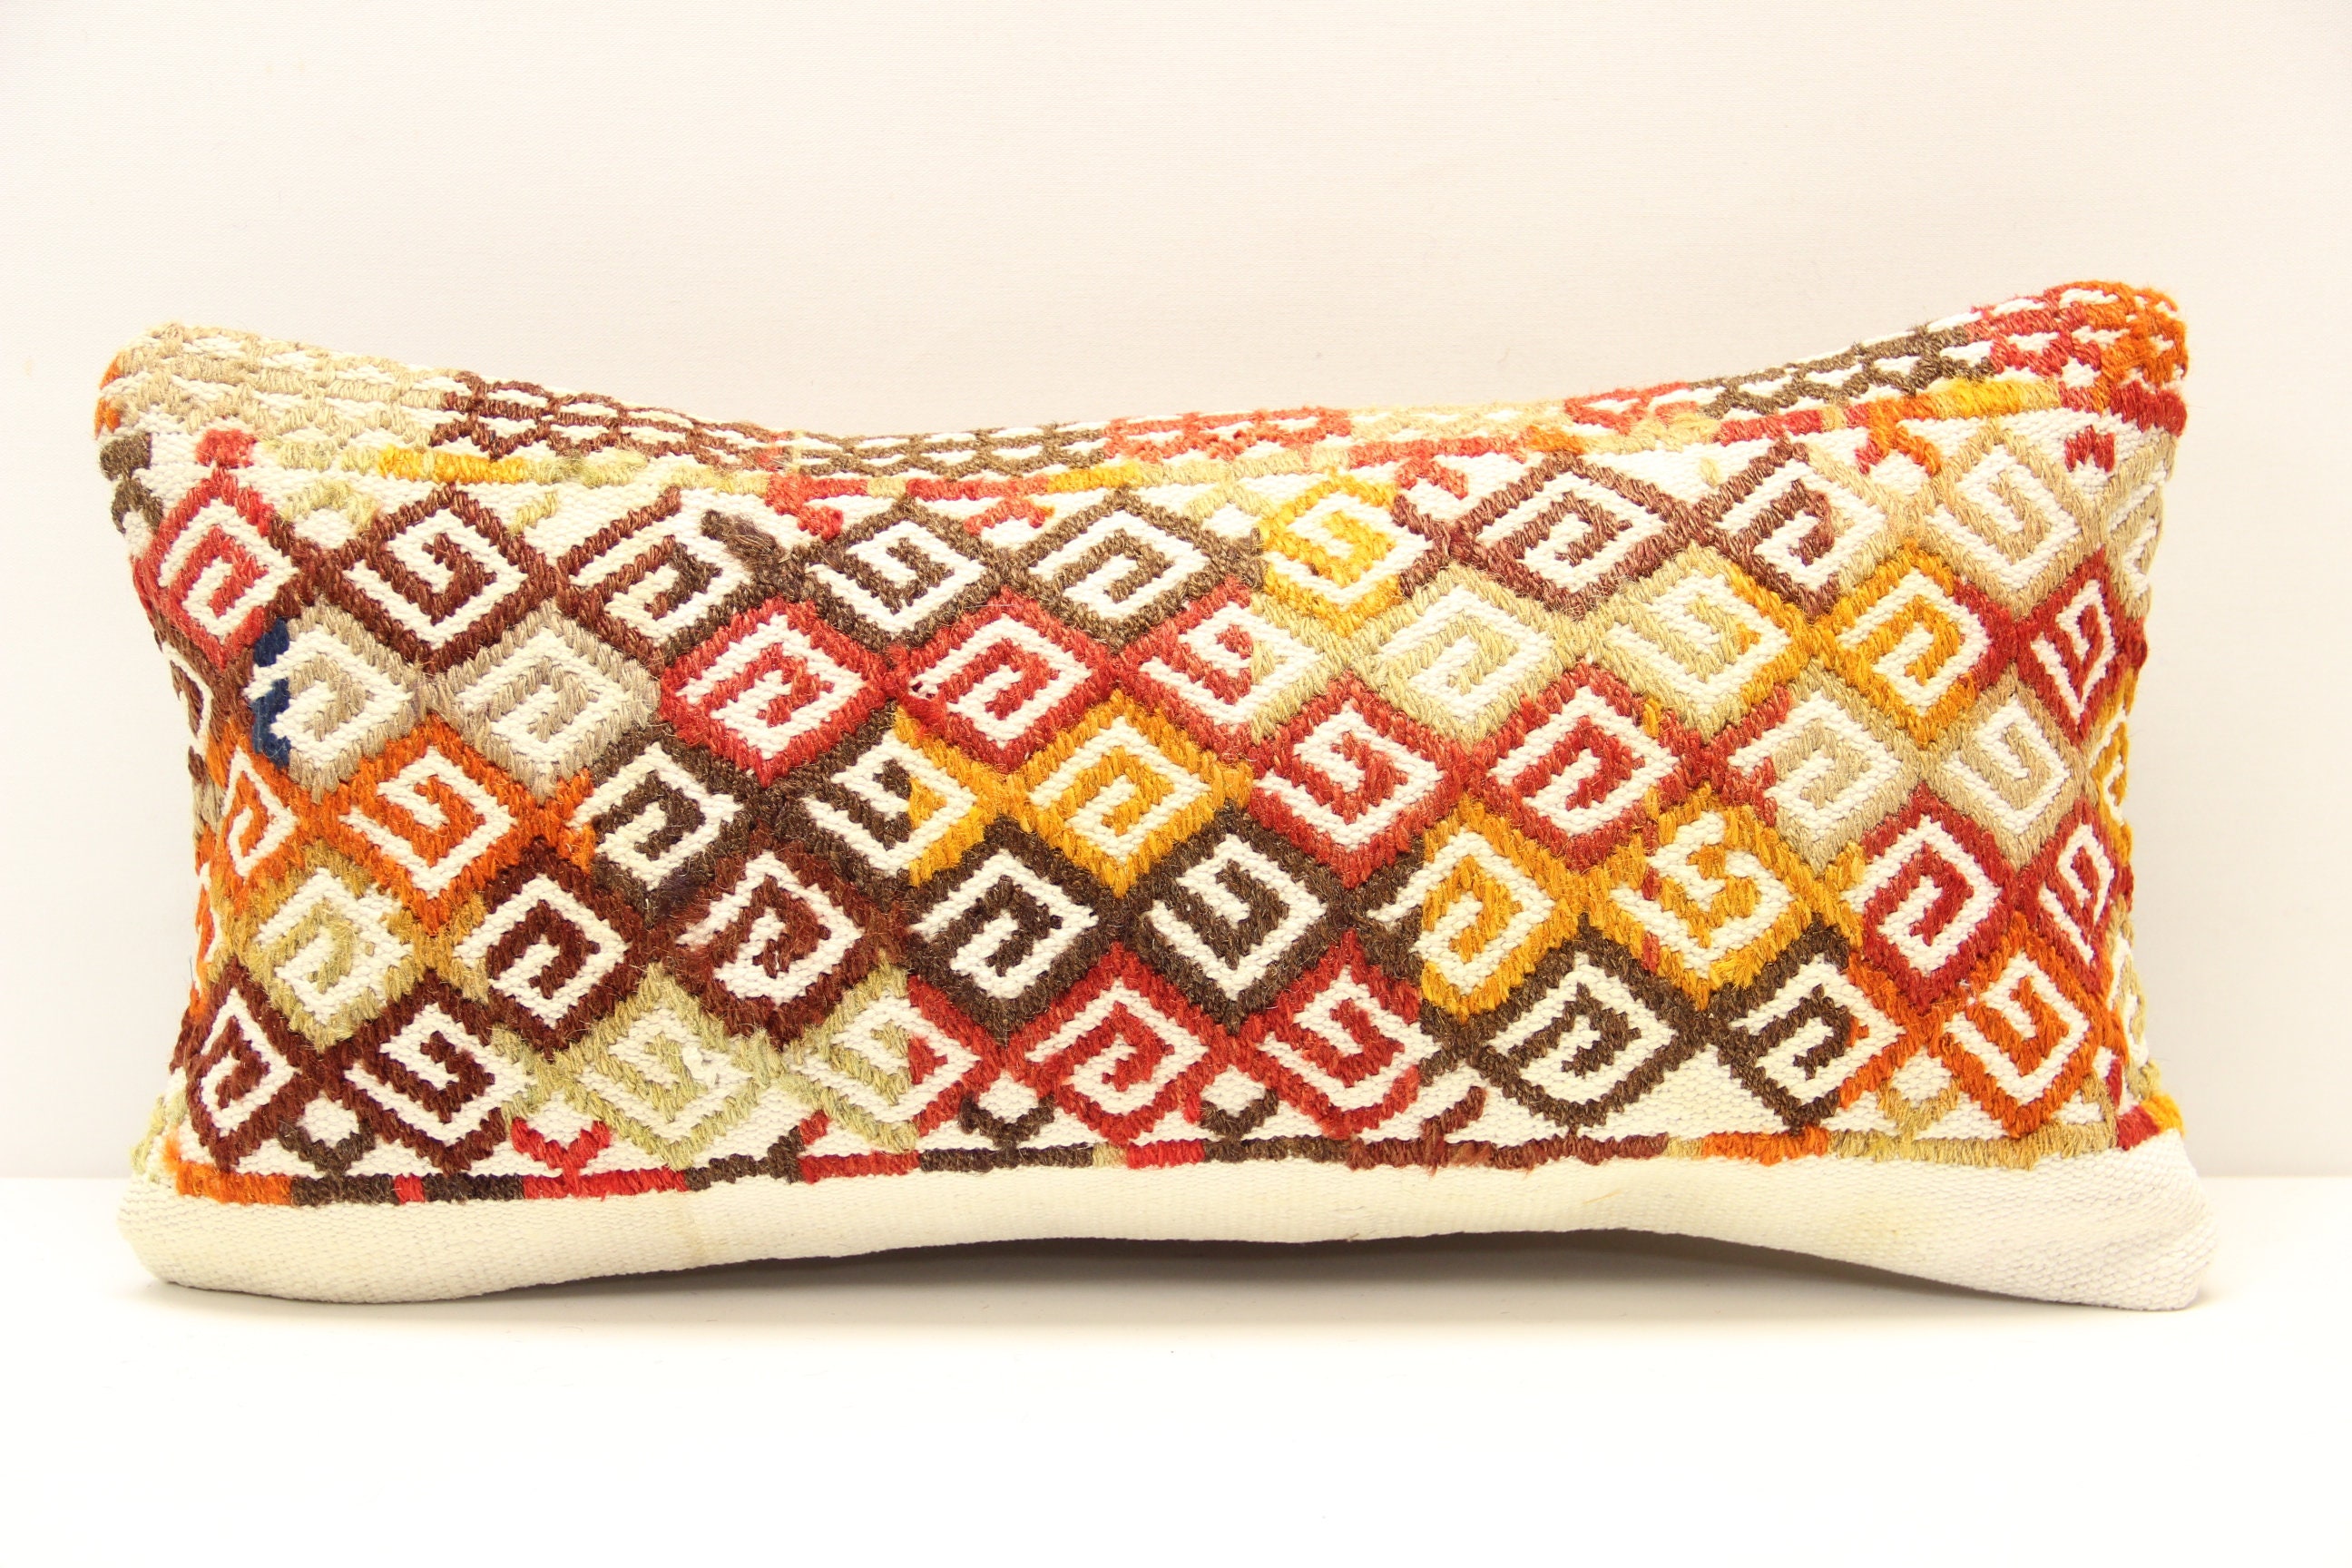 Kilim Lumbar Pillow Cover 10x20 inch 25x50 Cm Bedding Pillow Oriental art deco cushion cover Turkish Handmade Decorative Home Design KA-101